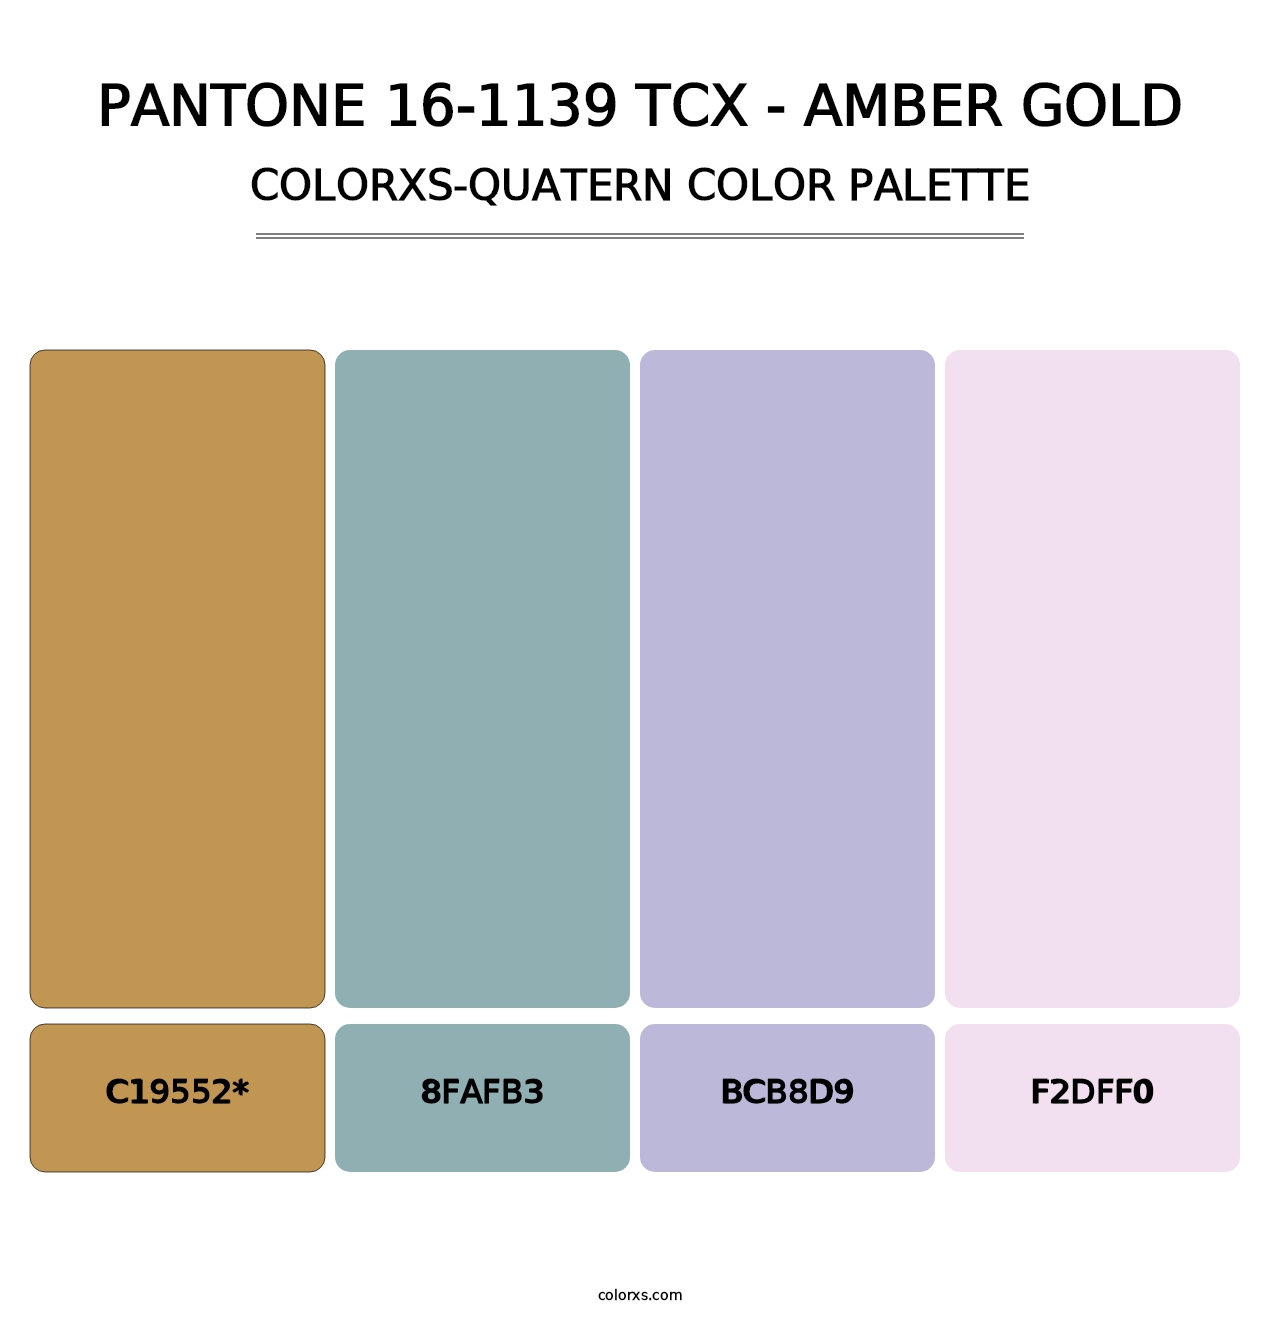 PANTONE 16-1139 TCX - Amber Gold - Colorxs Quatern Palette